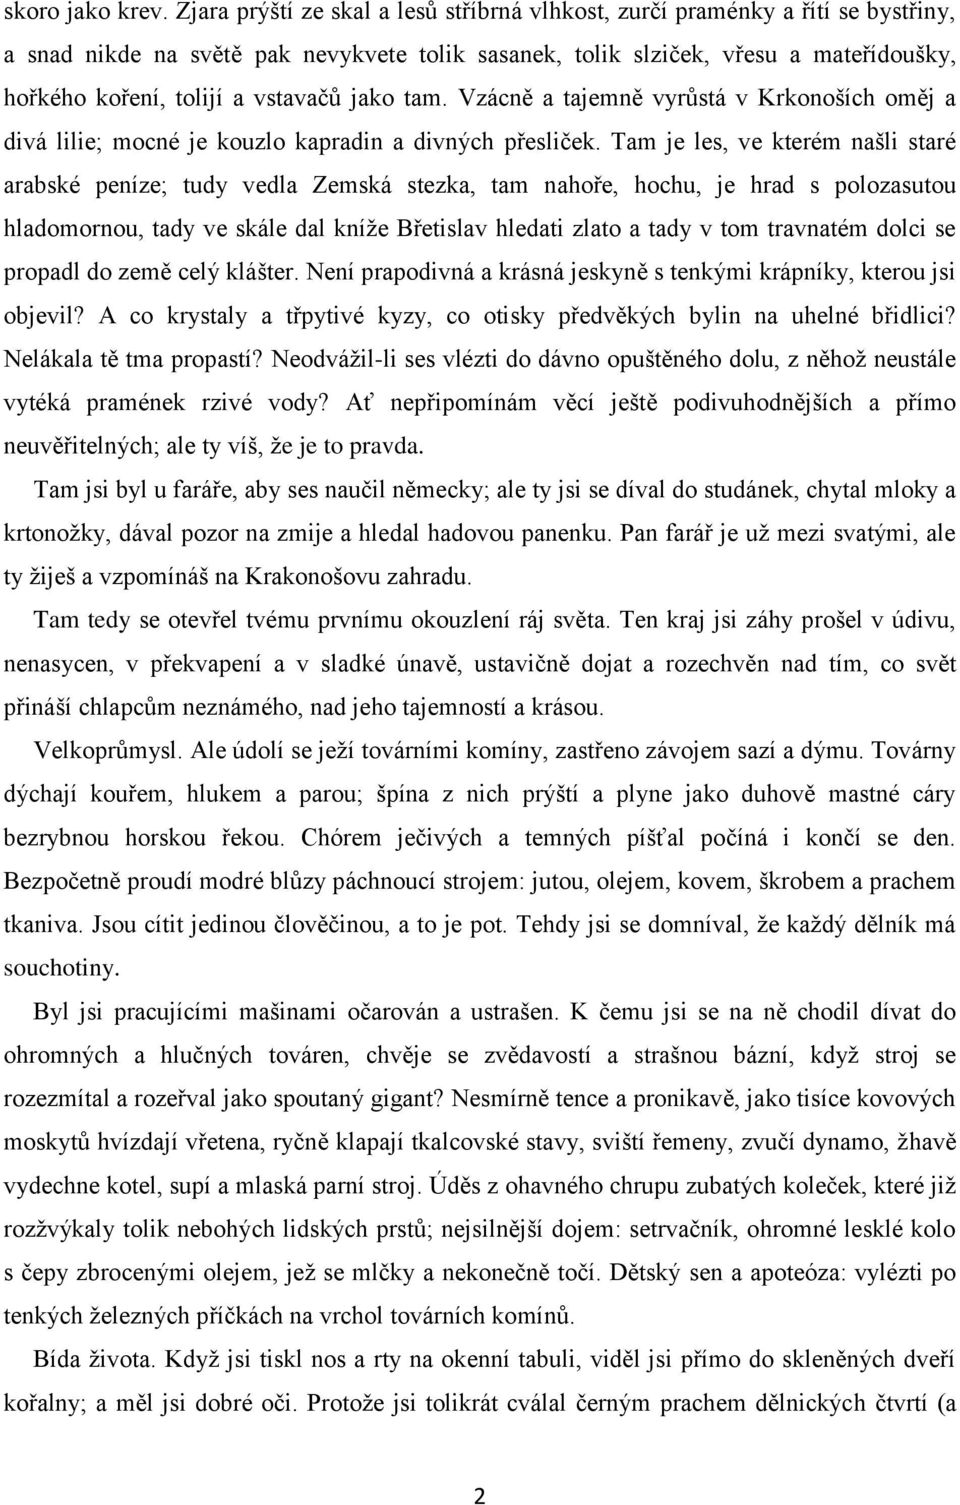 KAREL ČAPEK, JOSEF ČAPEK KRAKONOŠOVA ZAHRADA 1 - PDF Stažení zdarma